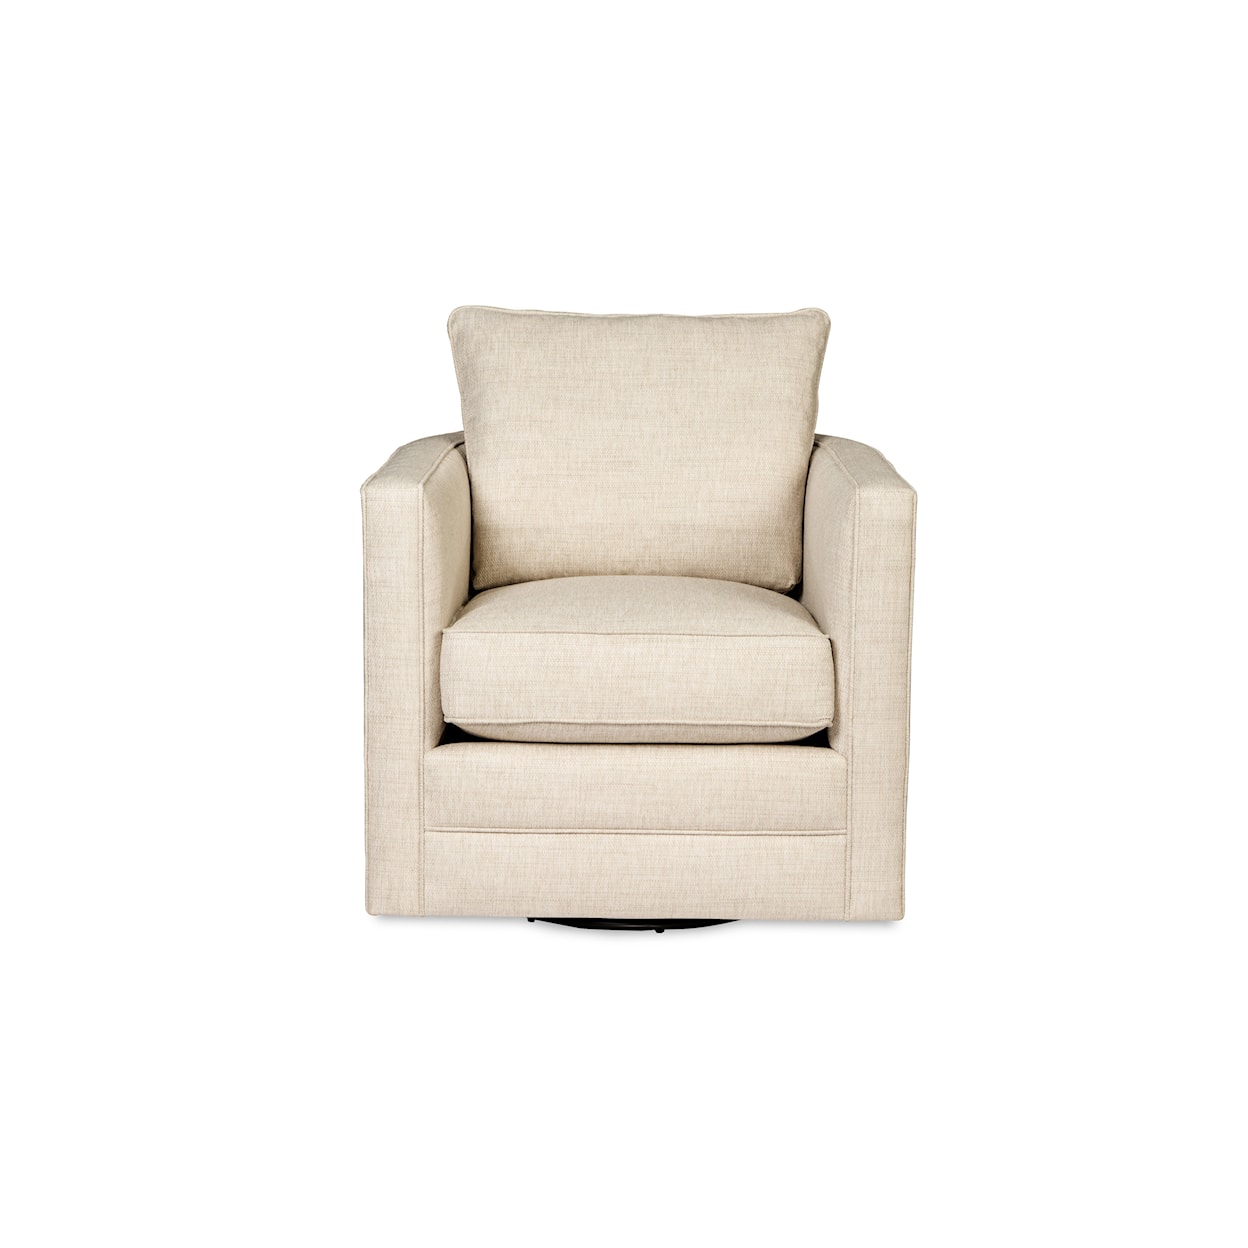 Craftmaster 018410 Swivel Chair